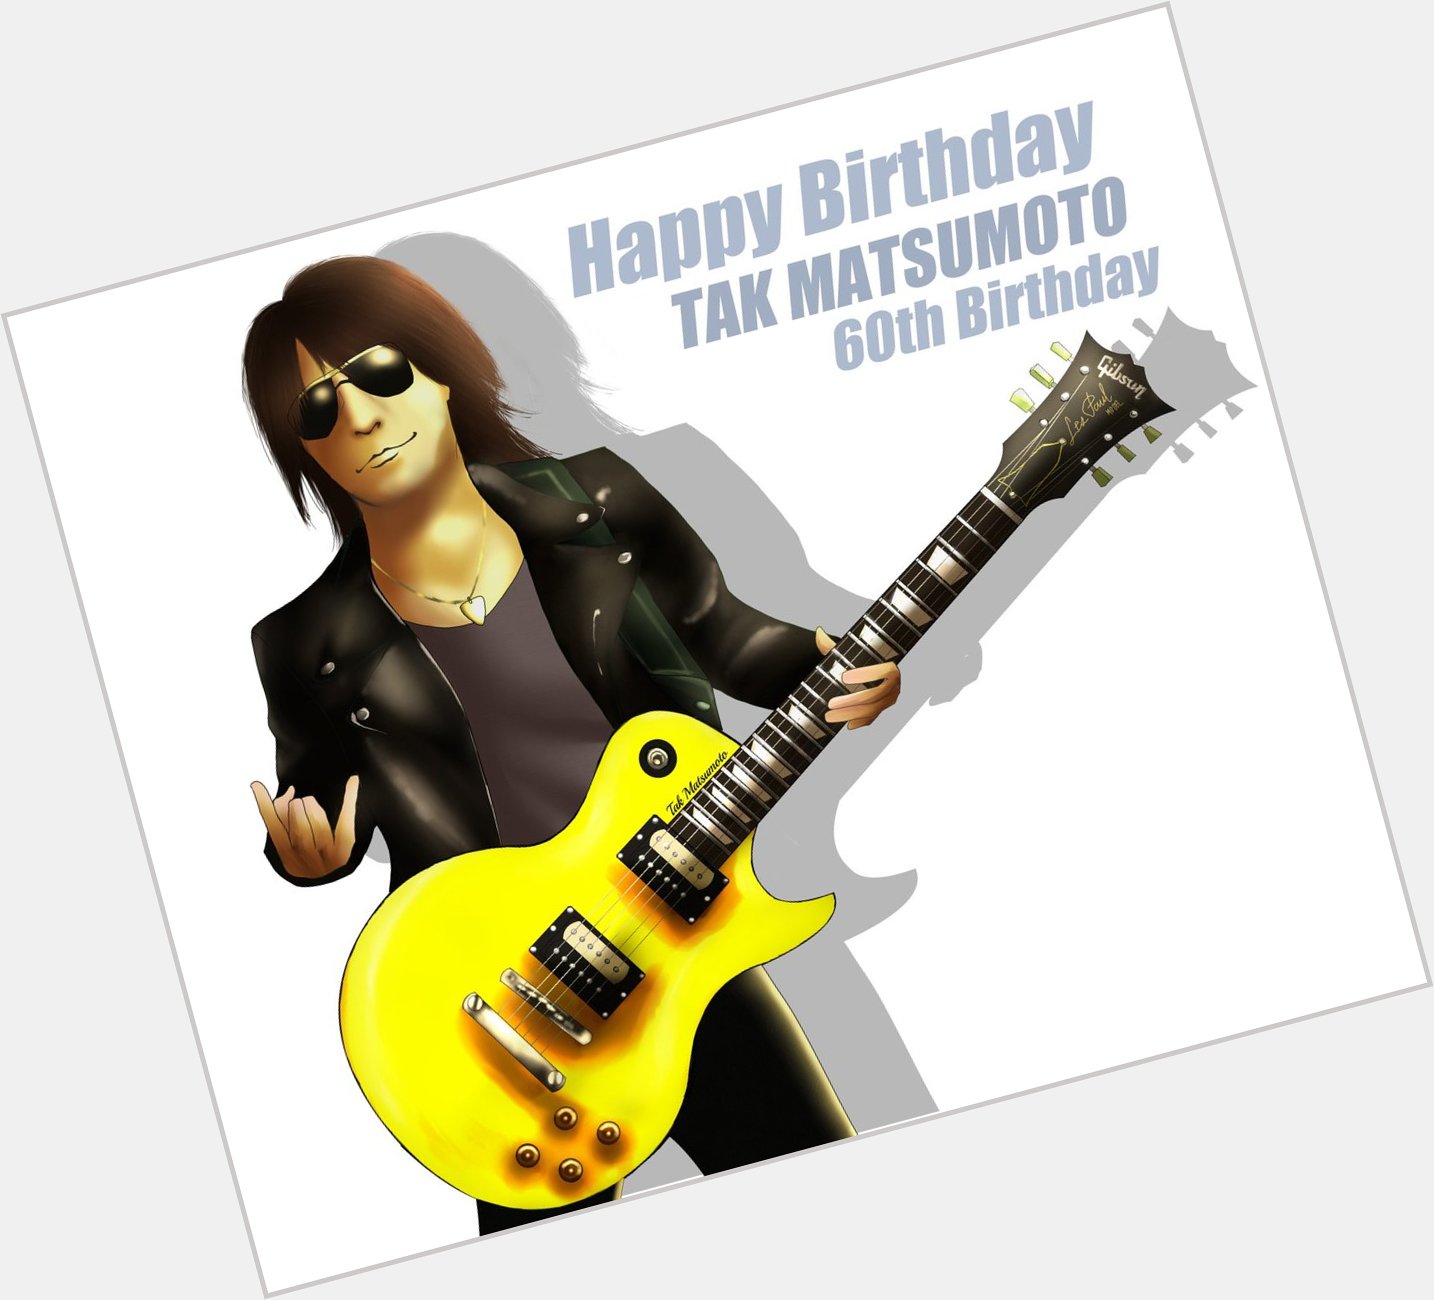 Happy birthday! TAK MATSUMOTO!  